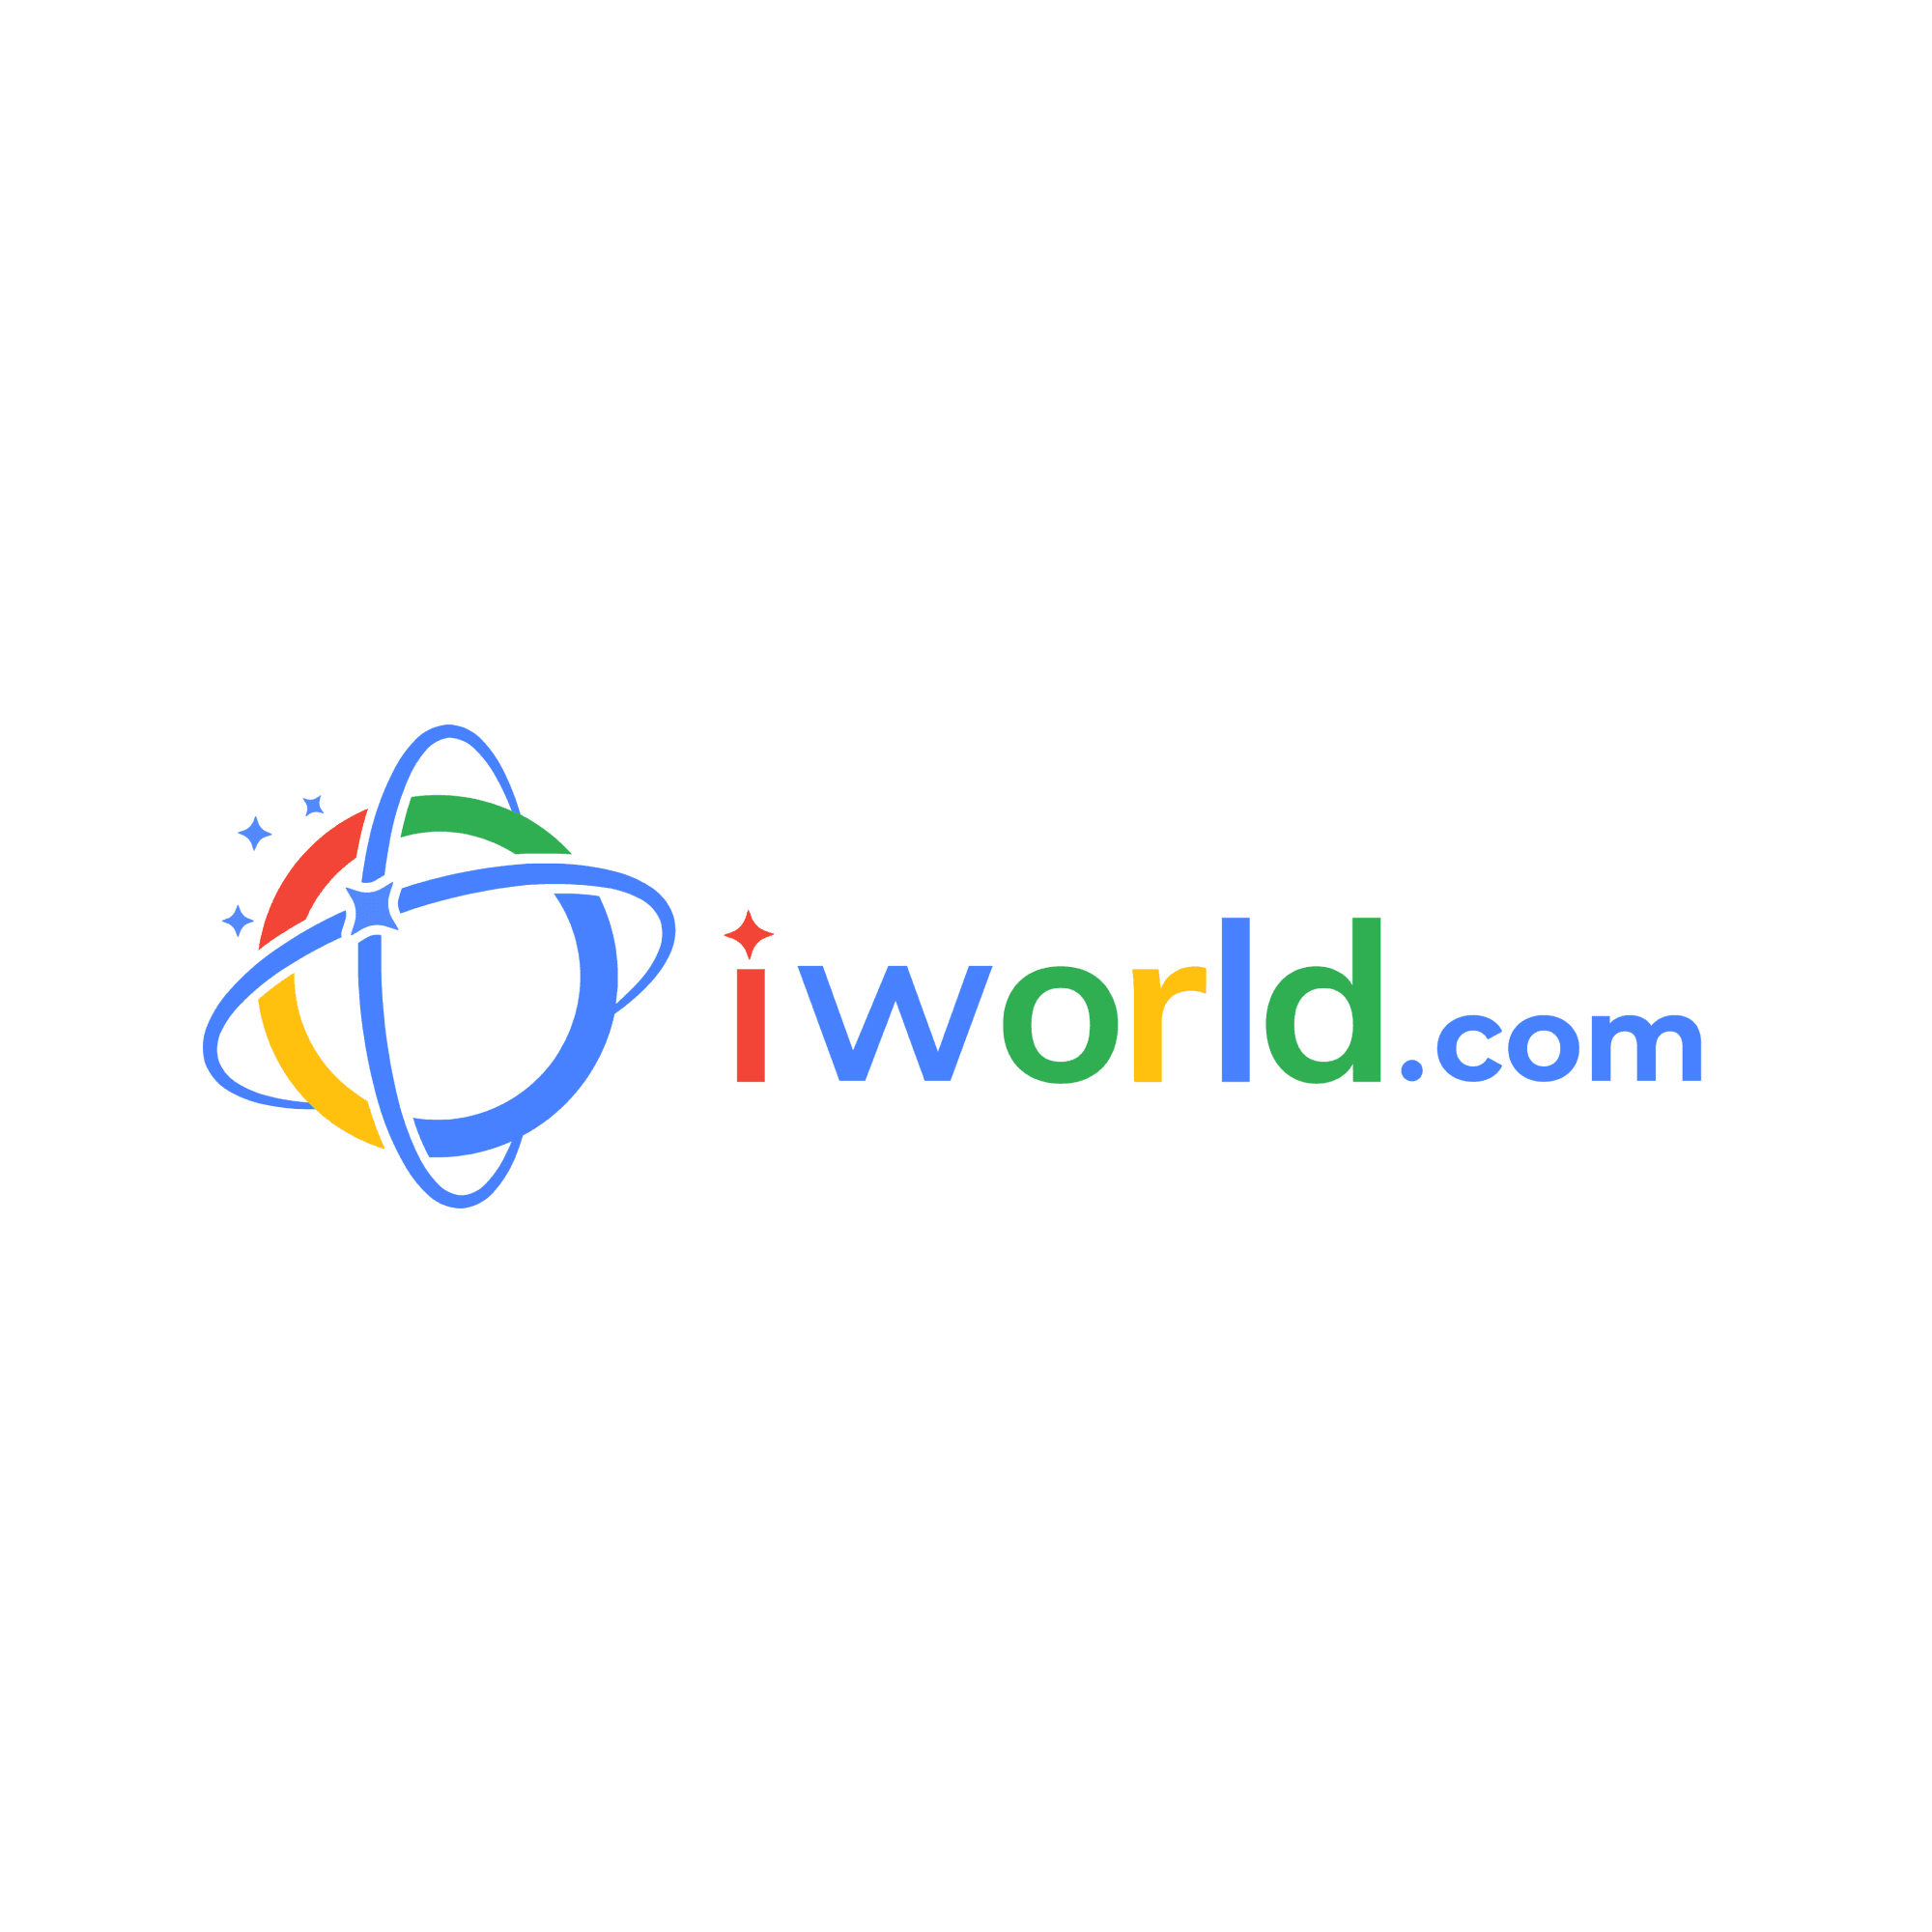 The logo of the international immigration marketplace iwolrd.com